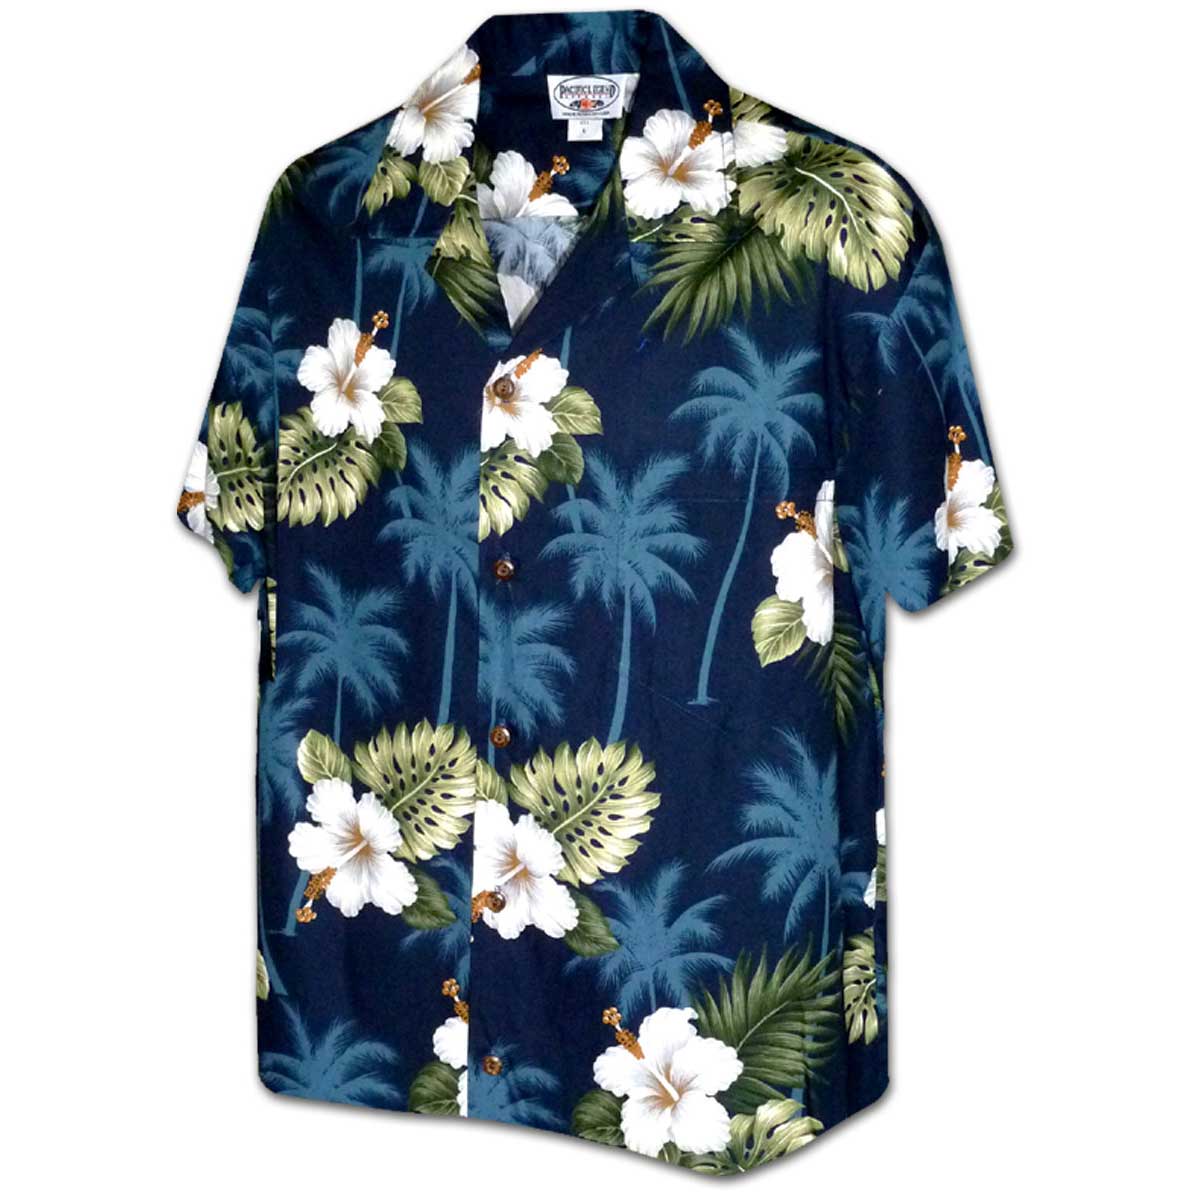 Christian Hawaiian Shirt,Collegiate Hawaiian Shirts,Hawaiian Guitar  Shirts,Novelty Hawaiian Shirt,Navy Blue Tshirts,Good t Shirts for  Guys,Unisex tee,Quality Cotton t Shirts,Best Plain t Shirt Brands at   Men's Clothing store